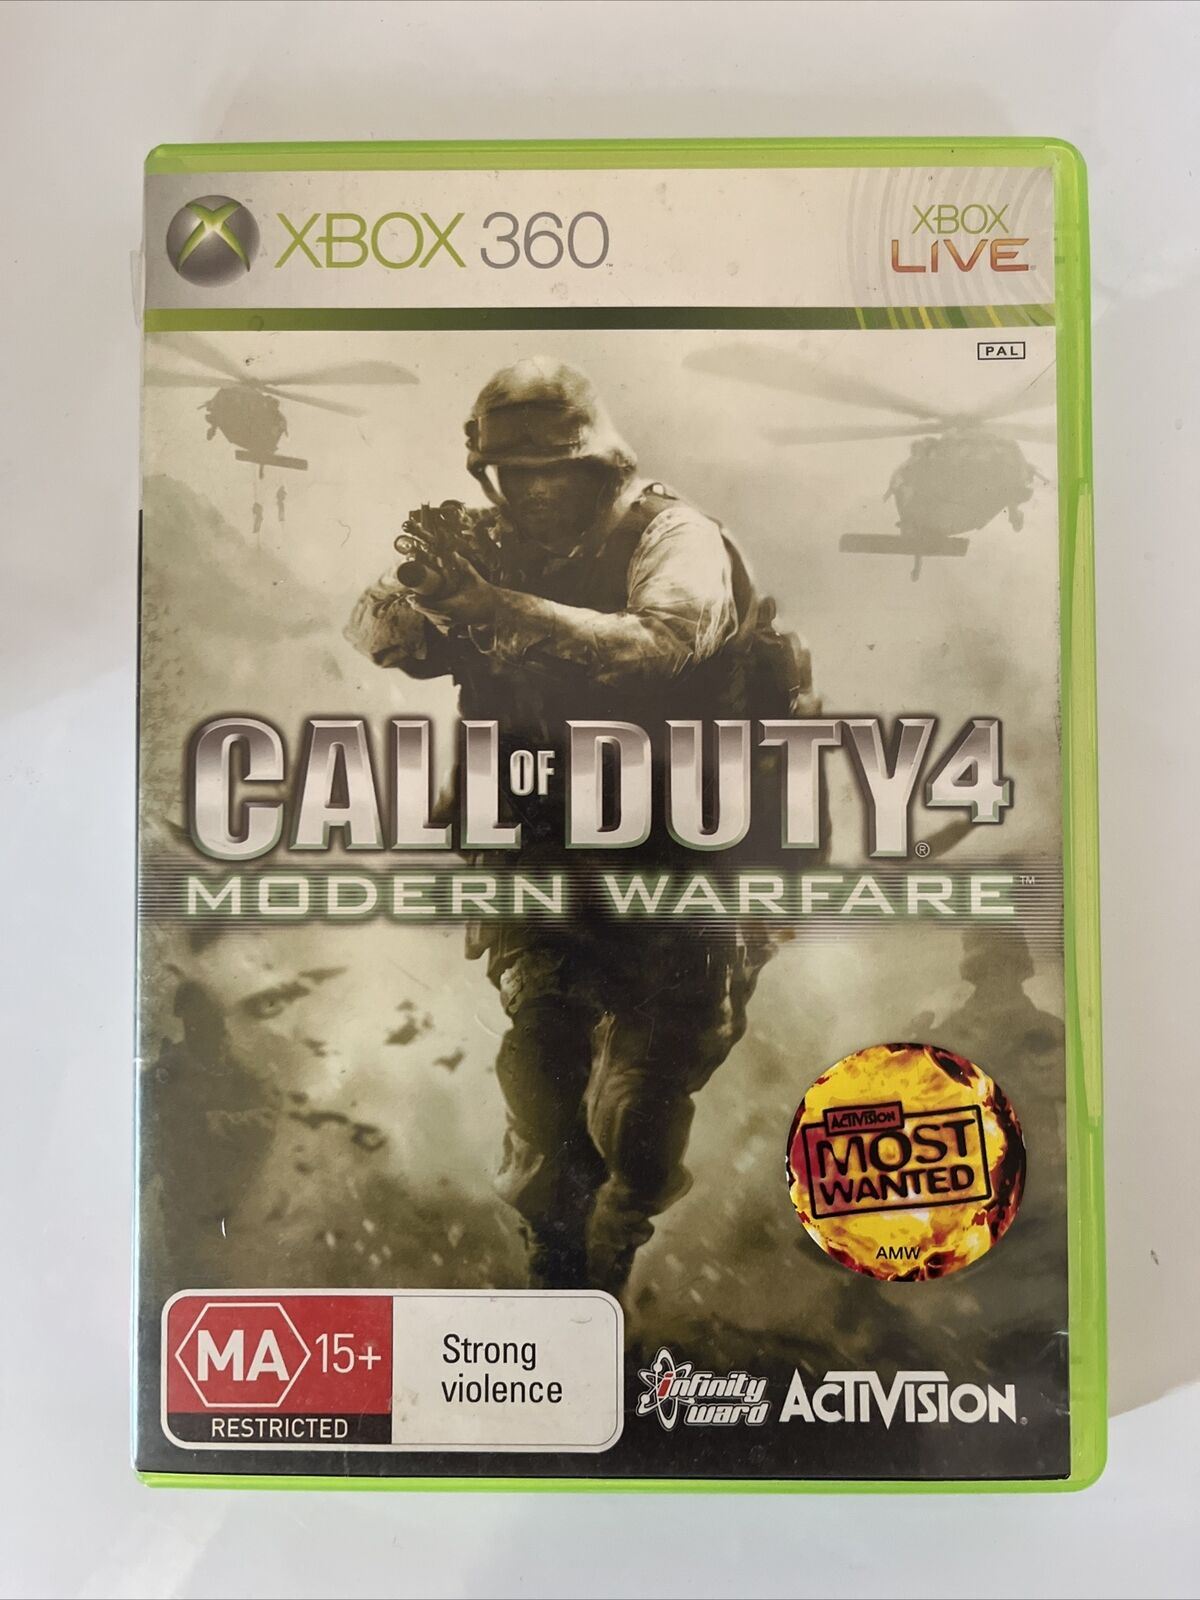 Call of Duty 4: Modern Warfare - Microsoft XBOX 360 PAL Game with Manual